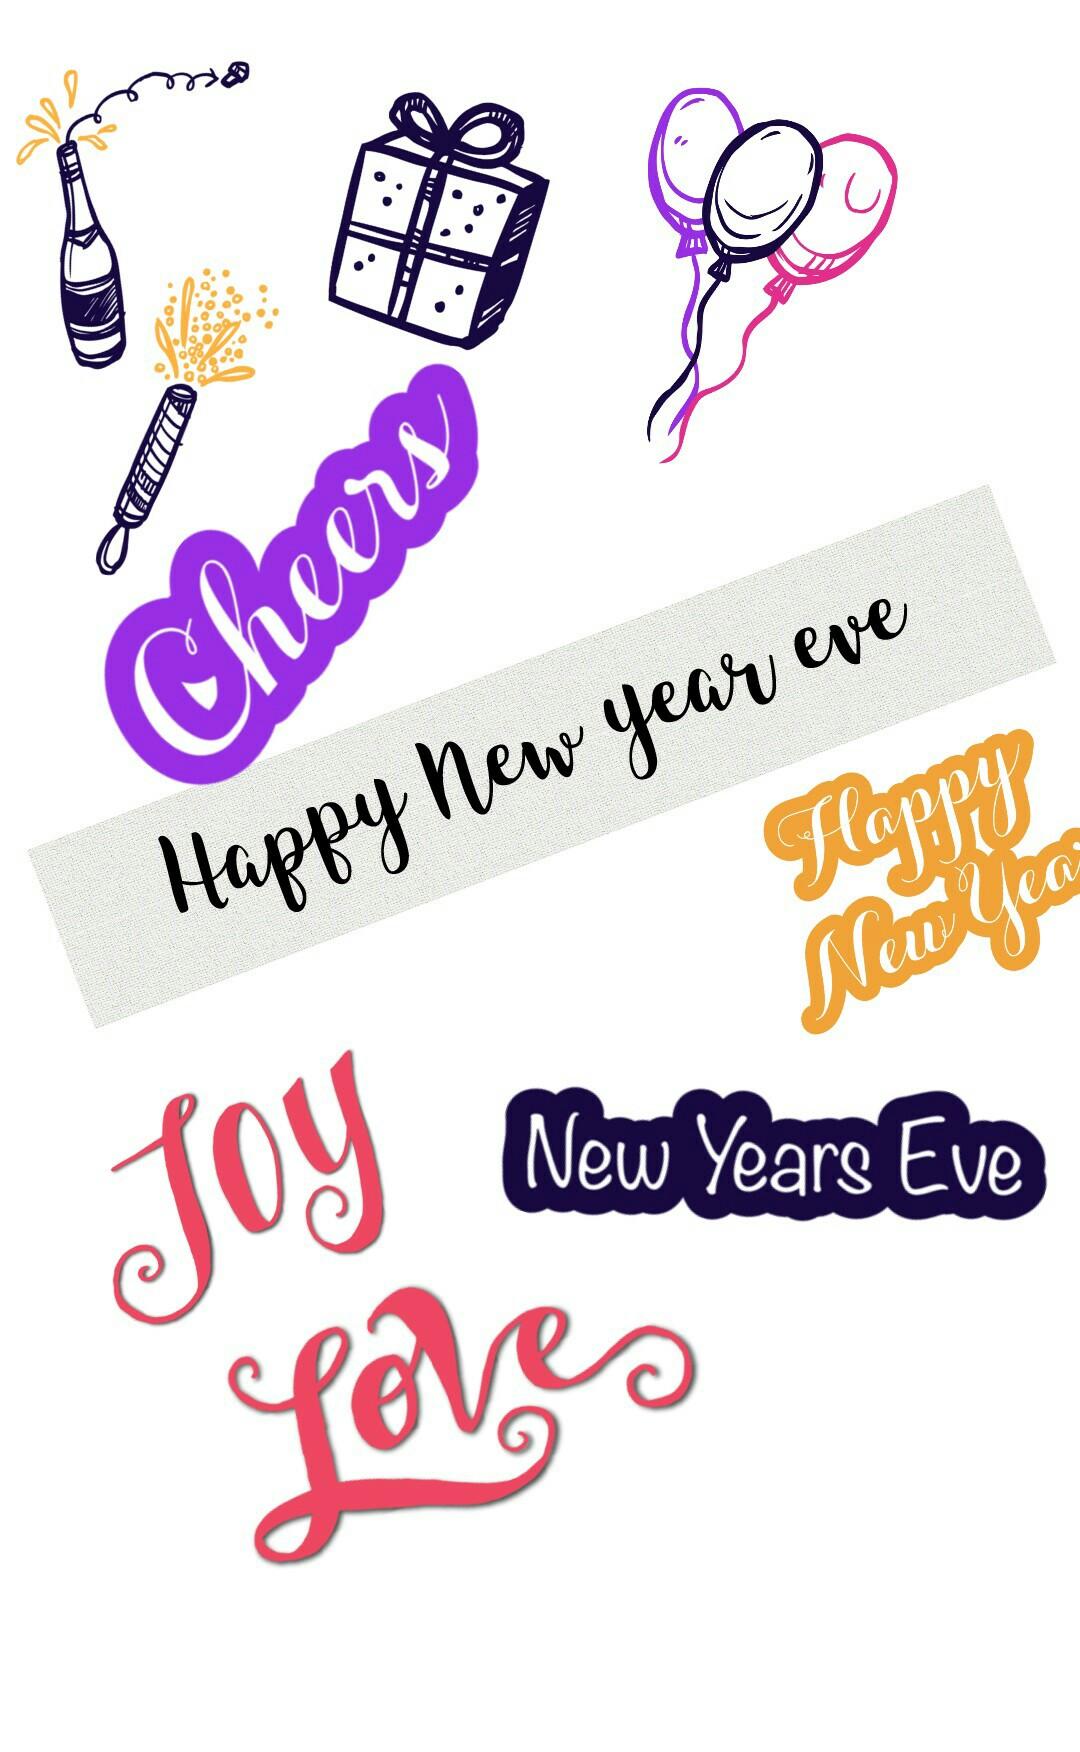 🎁🎁🎁Happy New year eve 💕💕💕💕
